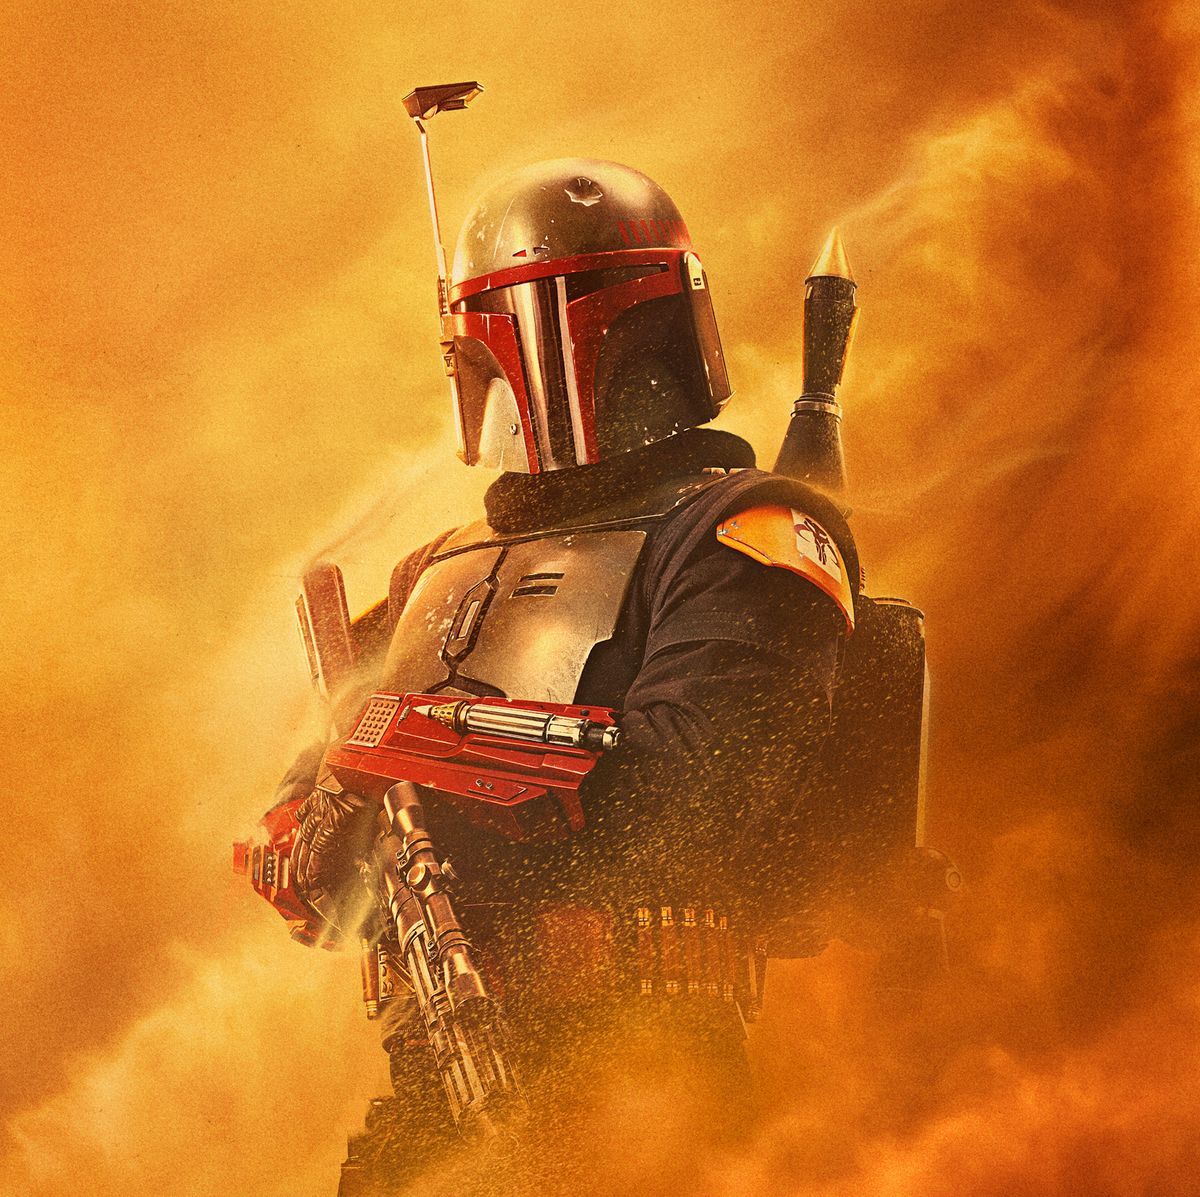 The Mandalorian' Season 3 New Poster Features Four Mandalorians Ready for  Battle - Star Wars News Net